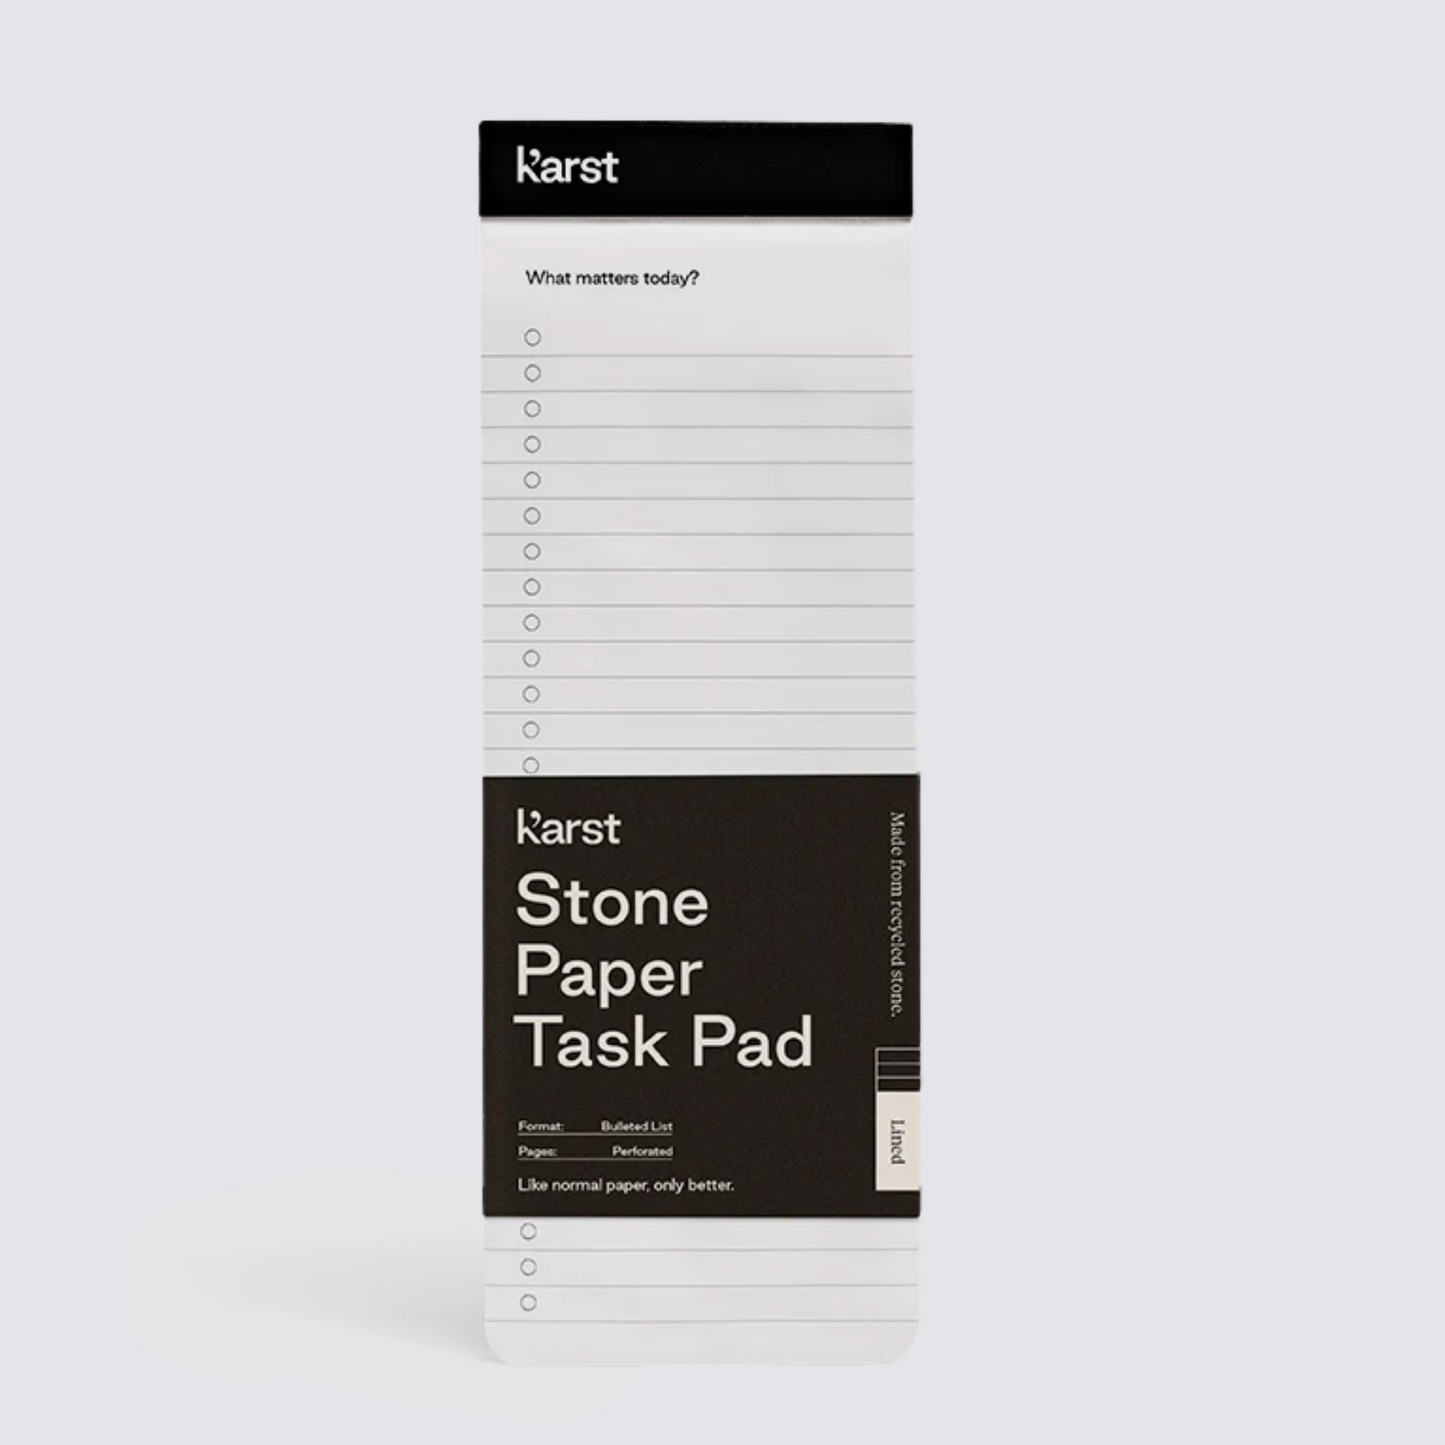 Task Pad - Stone Paper